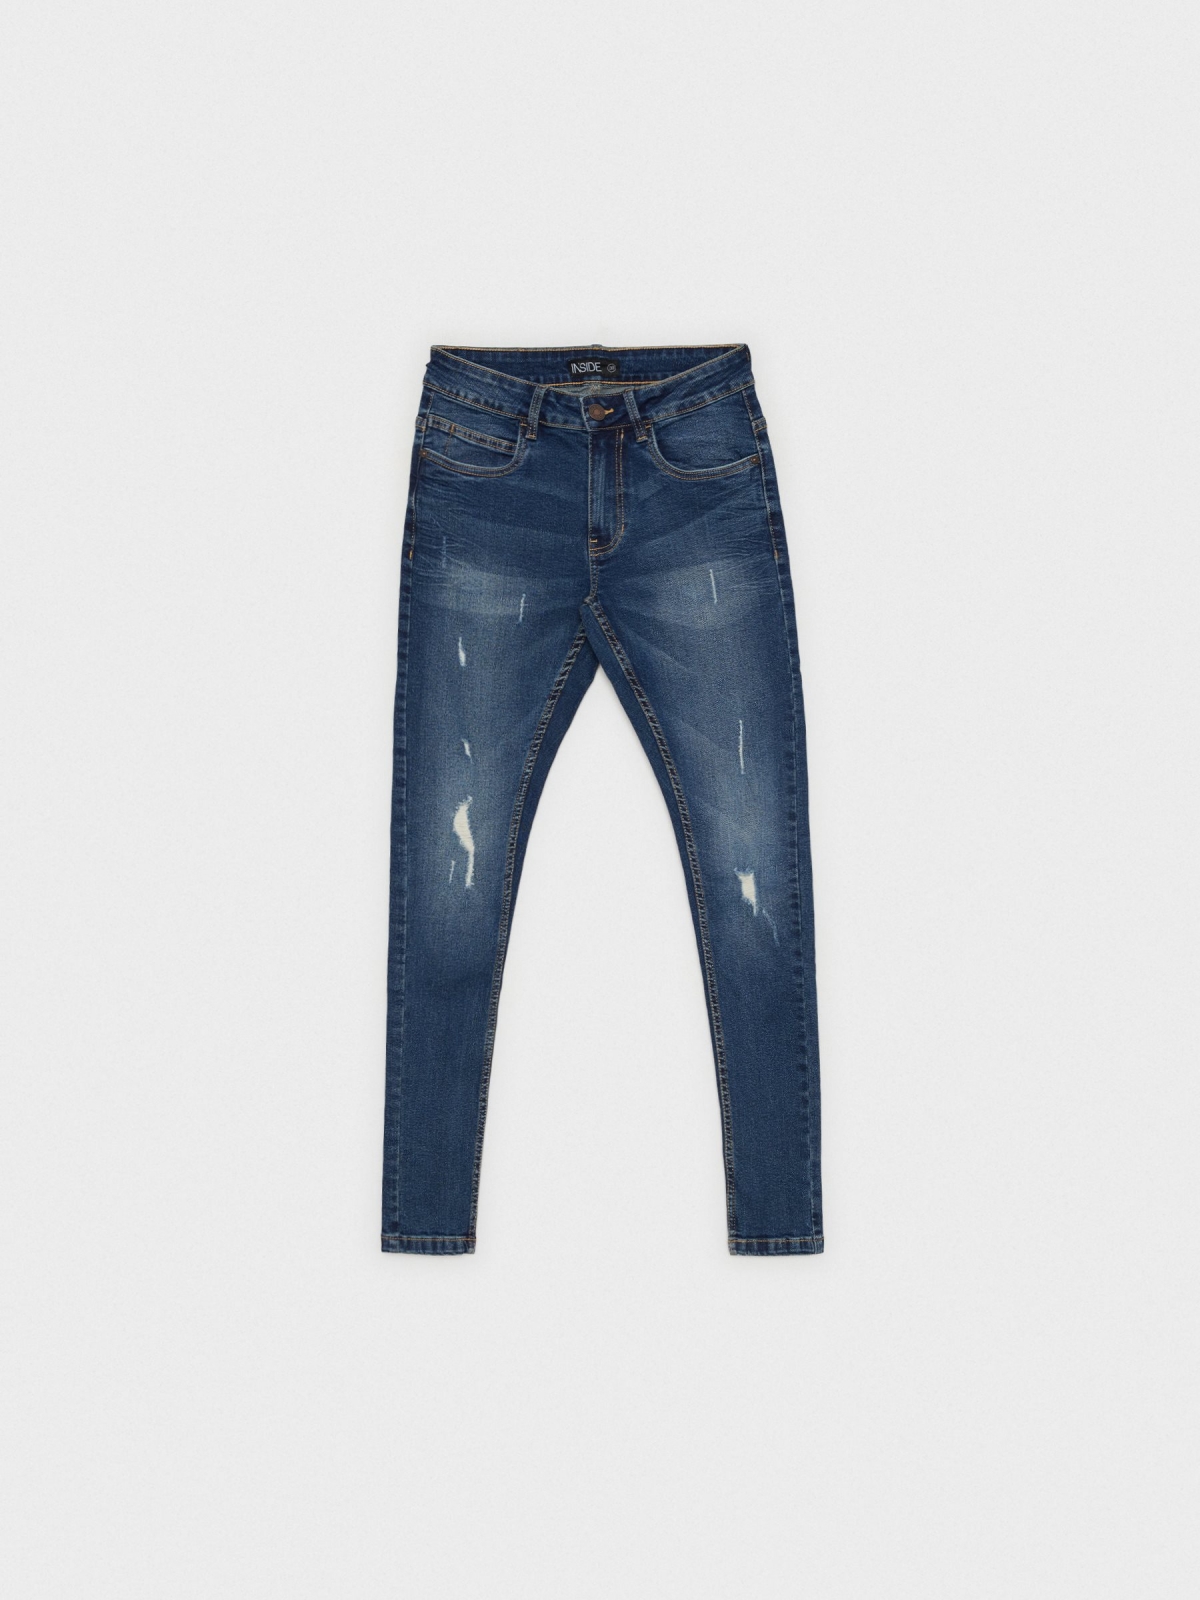  Men's superskinny jeans navy